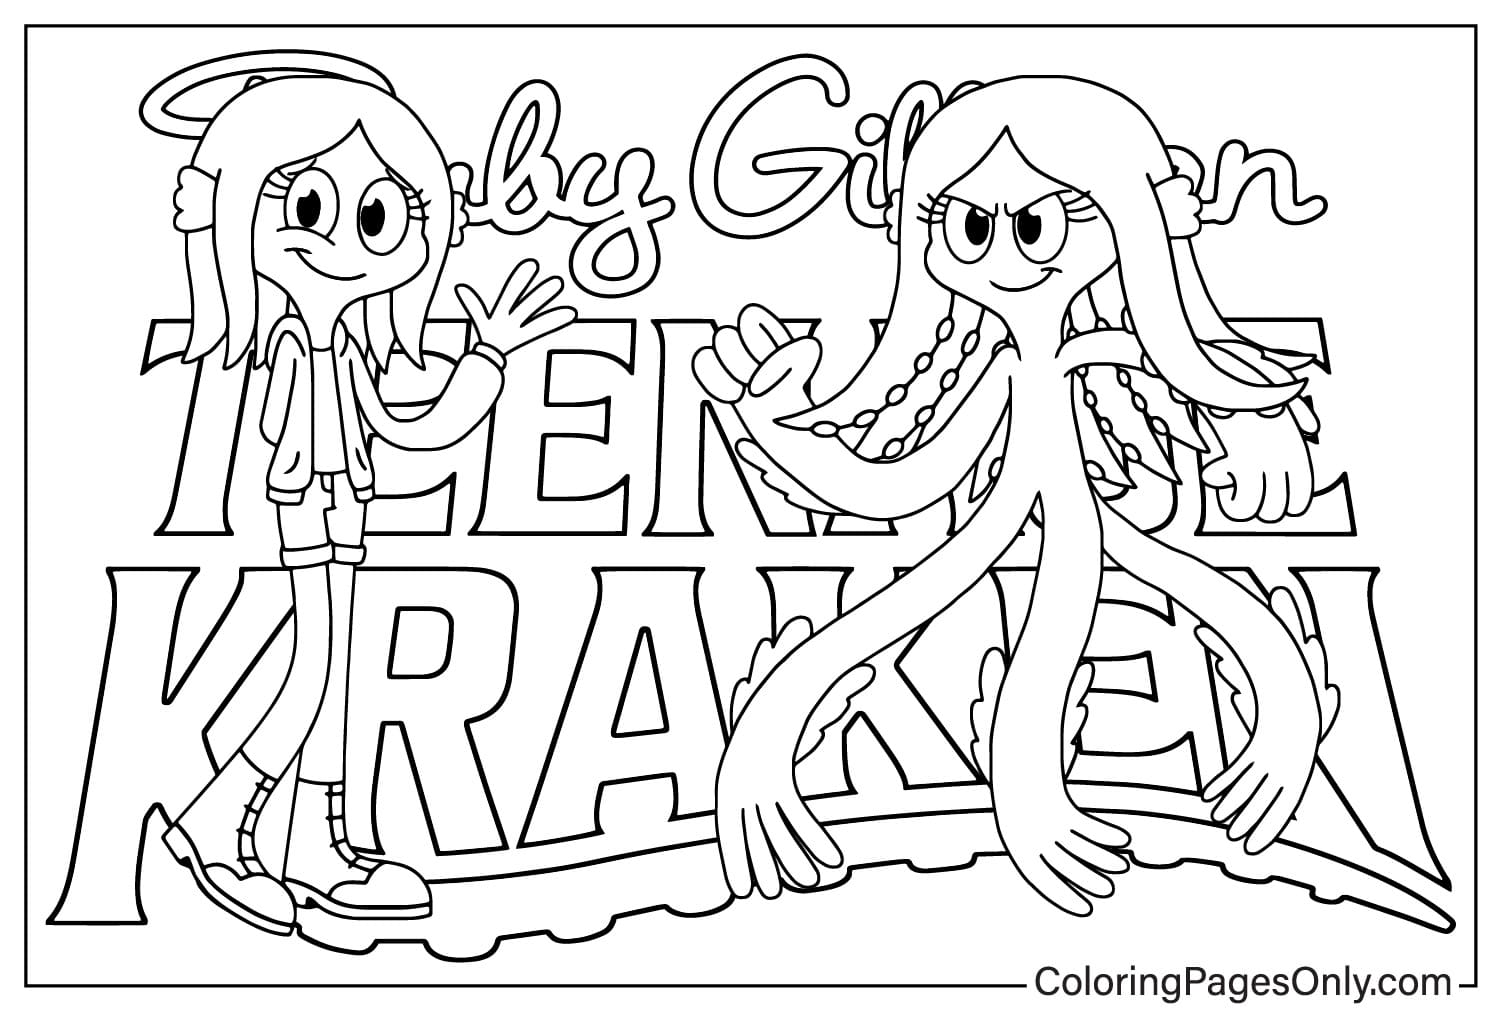 Ruby Gillman Teenage Kraken Coloring Page to Print from Ruby Gillman Teenage Kraken